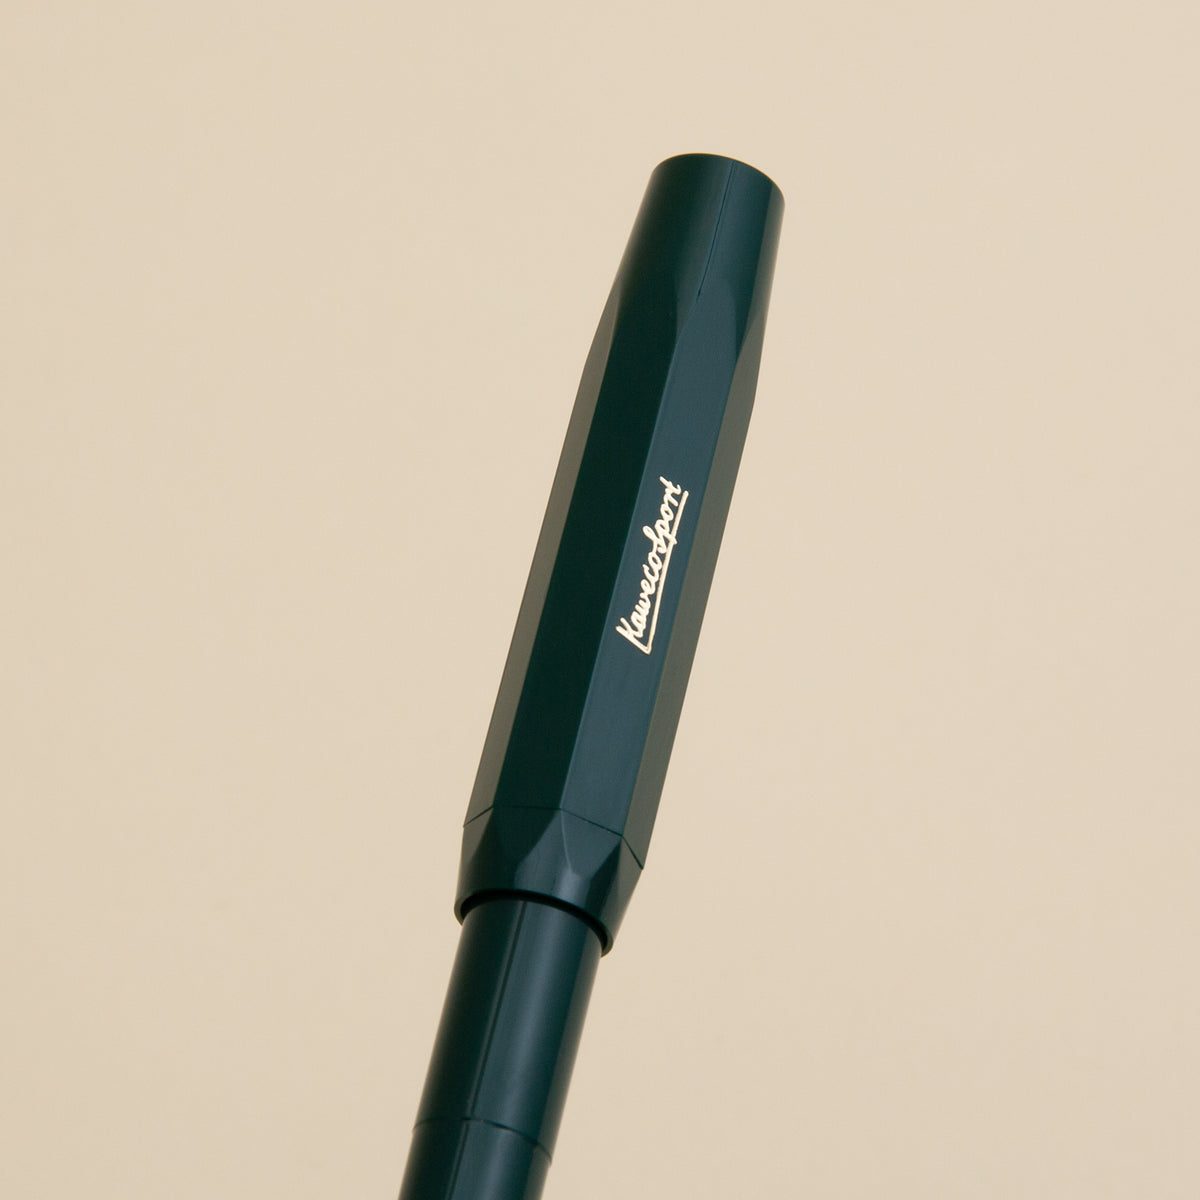 Kaweco Sport Fountain Pen - Green – The Good Liver